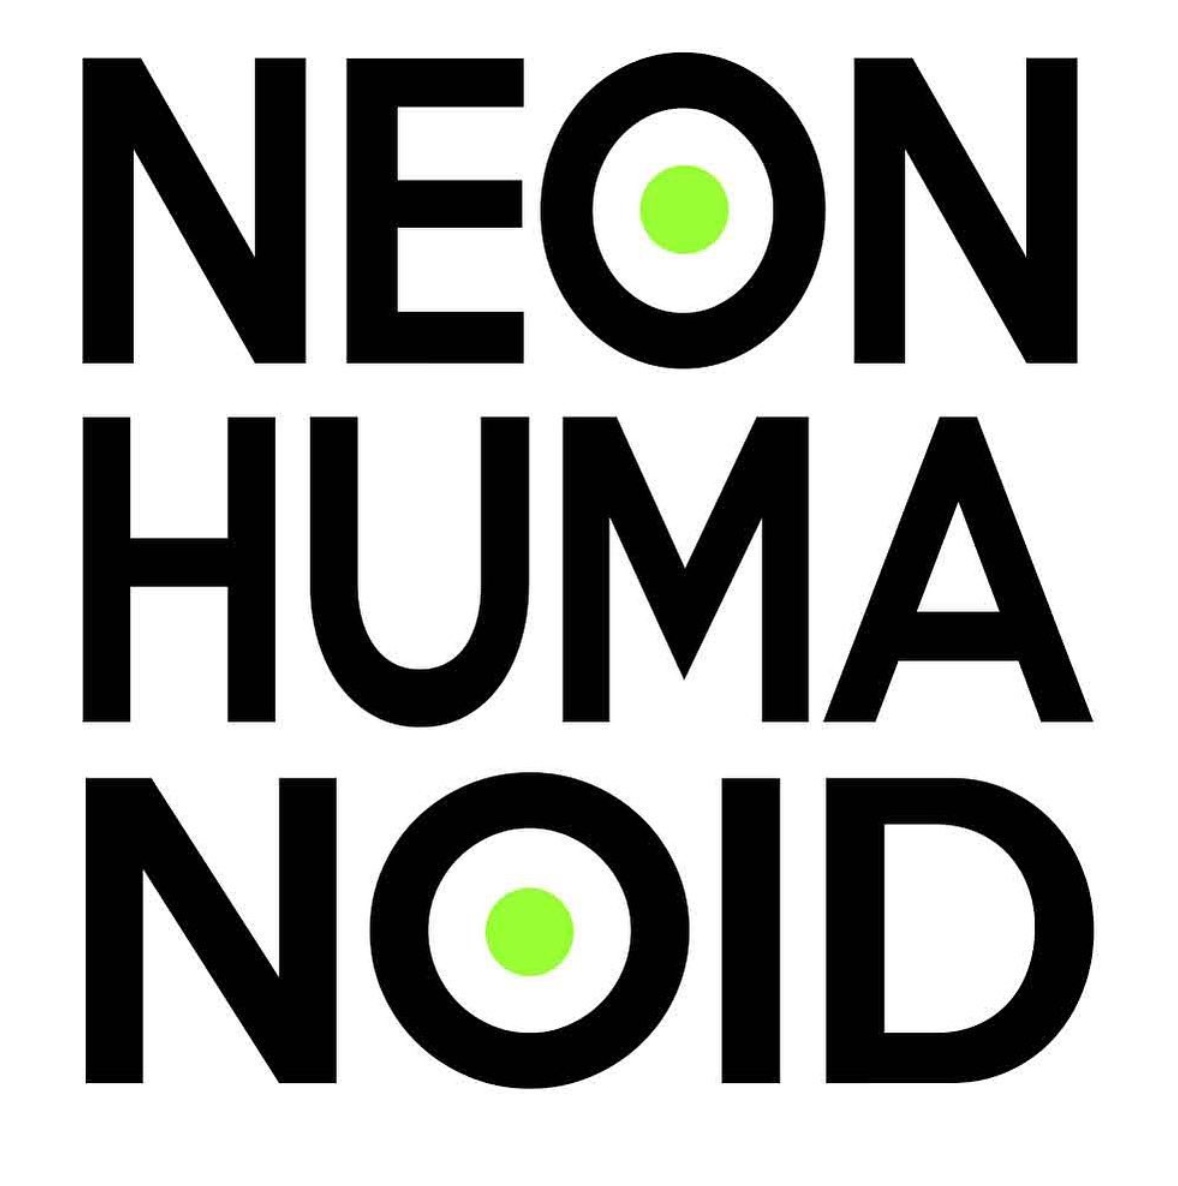 The Neon Humanoid